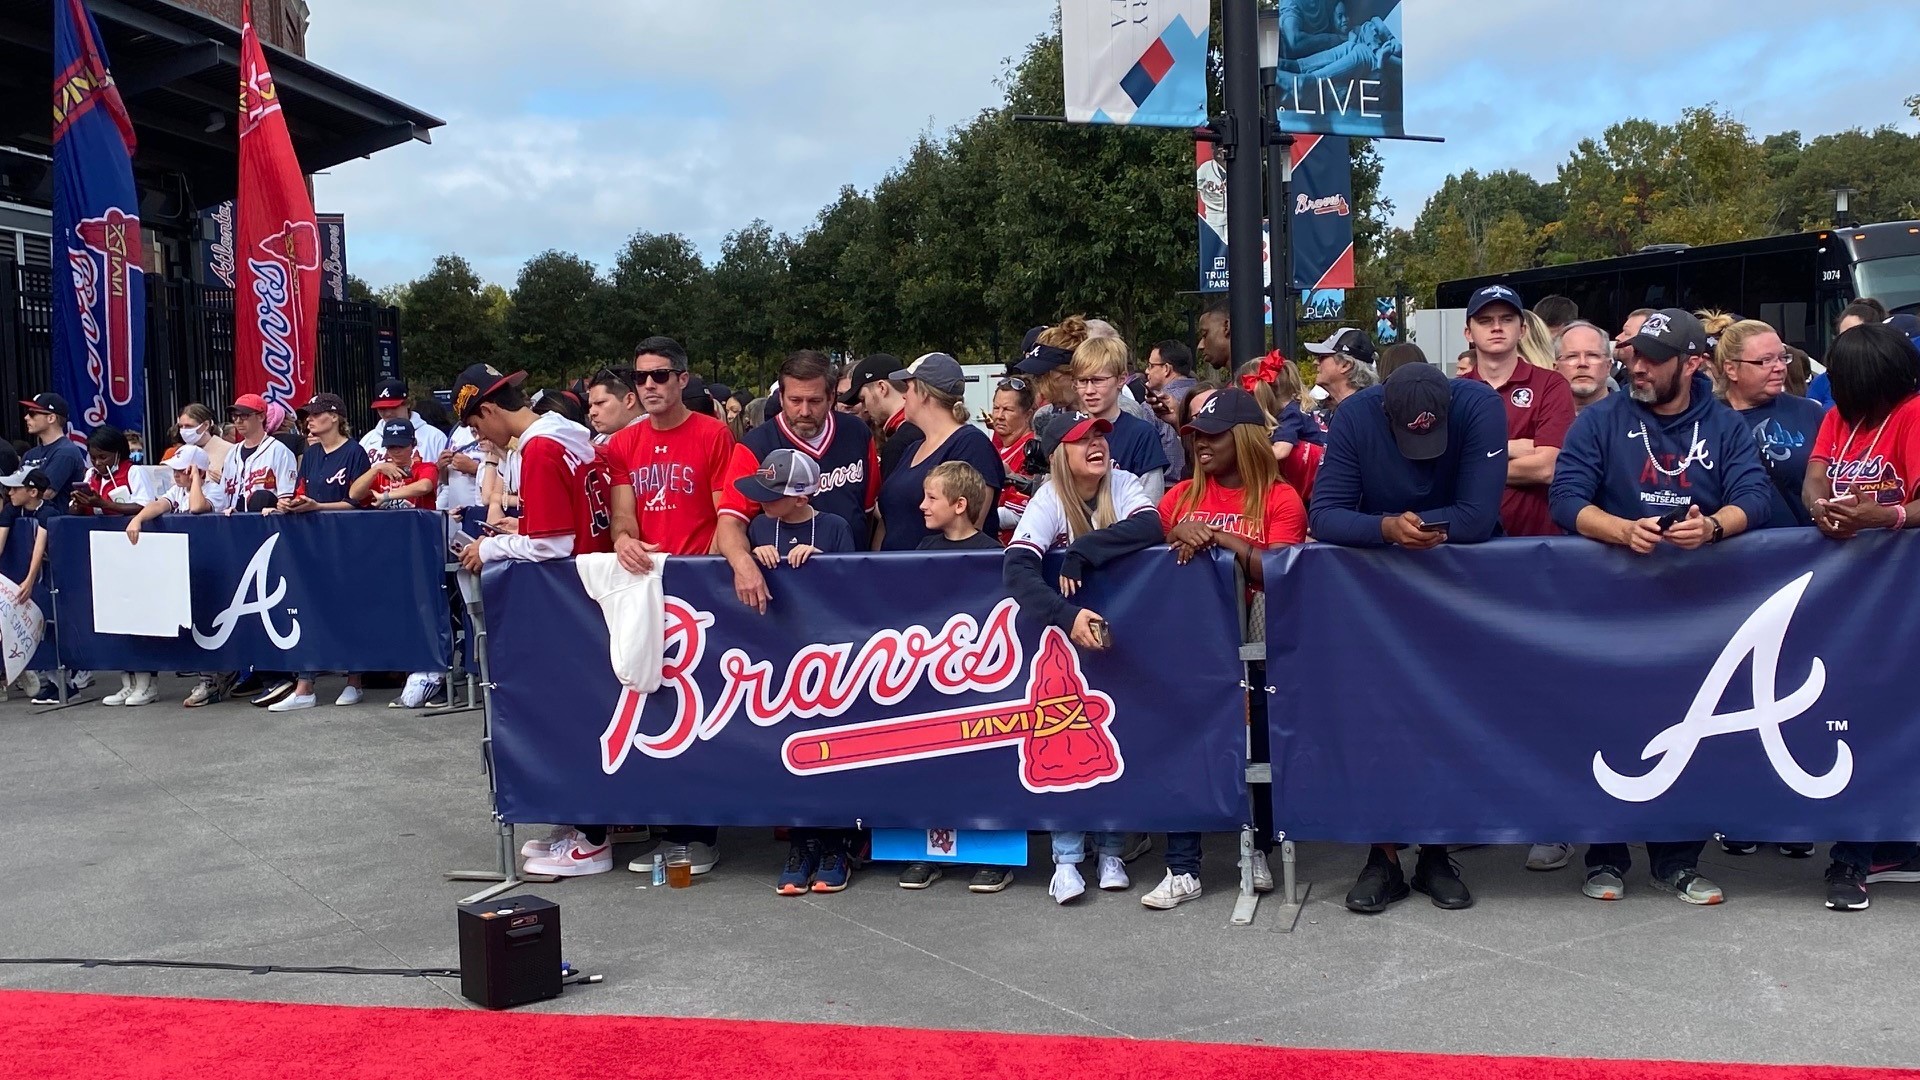 Braves to World Series, Send off team at Turist Park